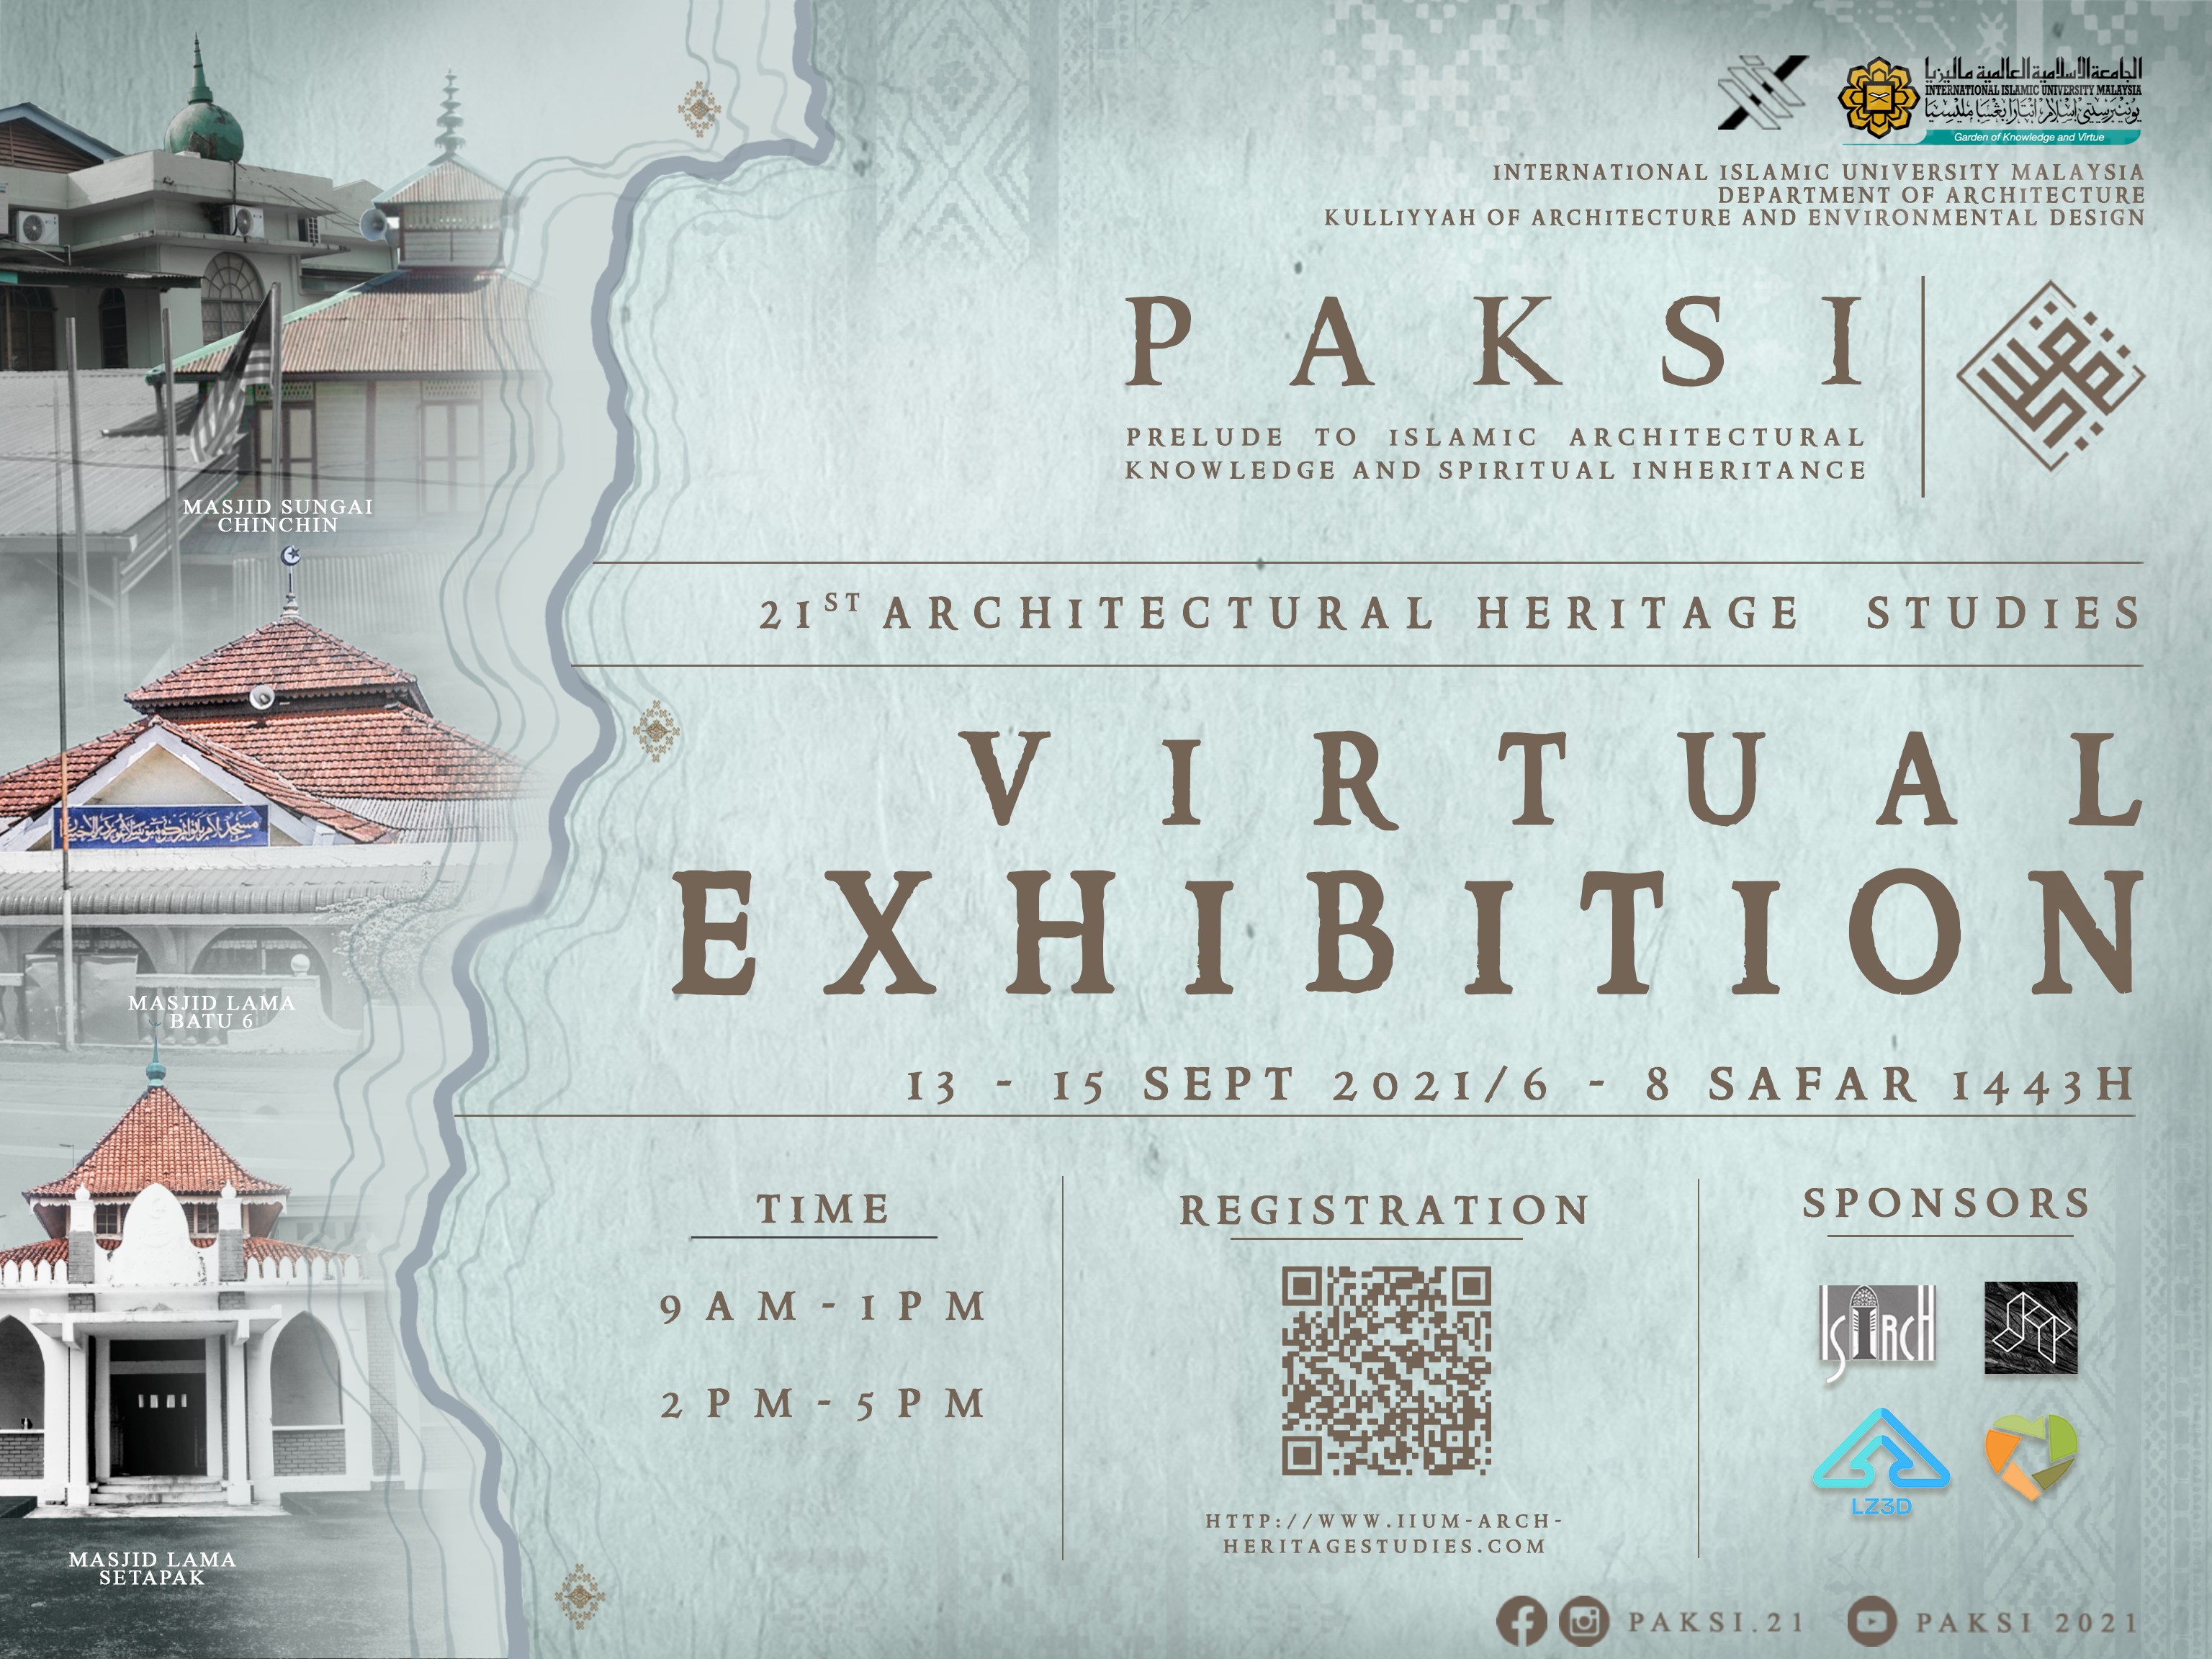 PAKSI 2021 (Prelude to Islamic Architectural Knowledge And Spiritual Inheritance)